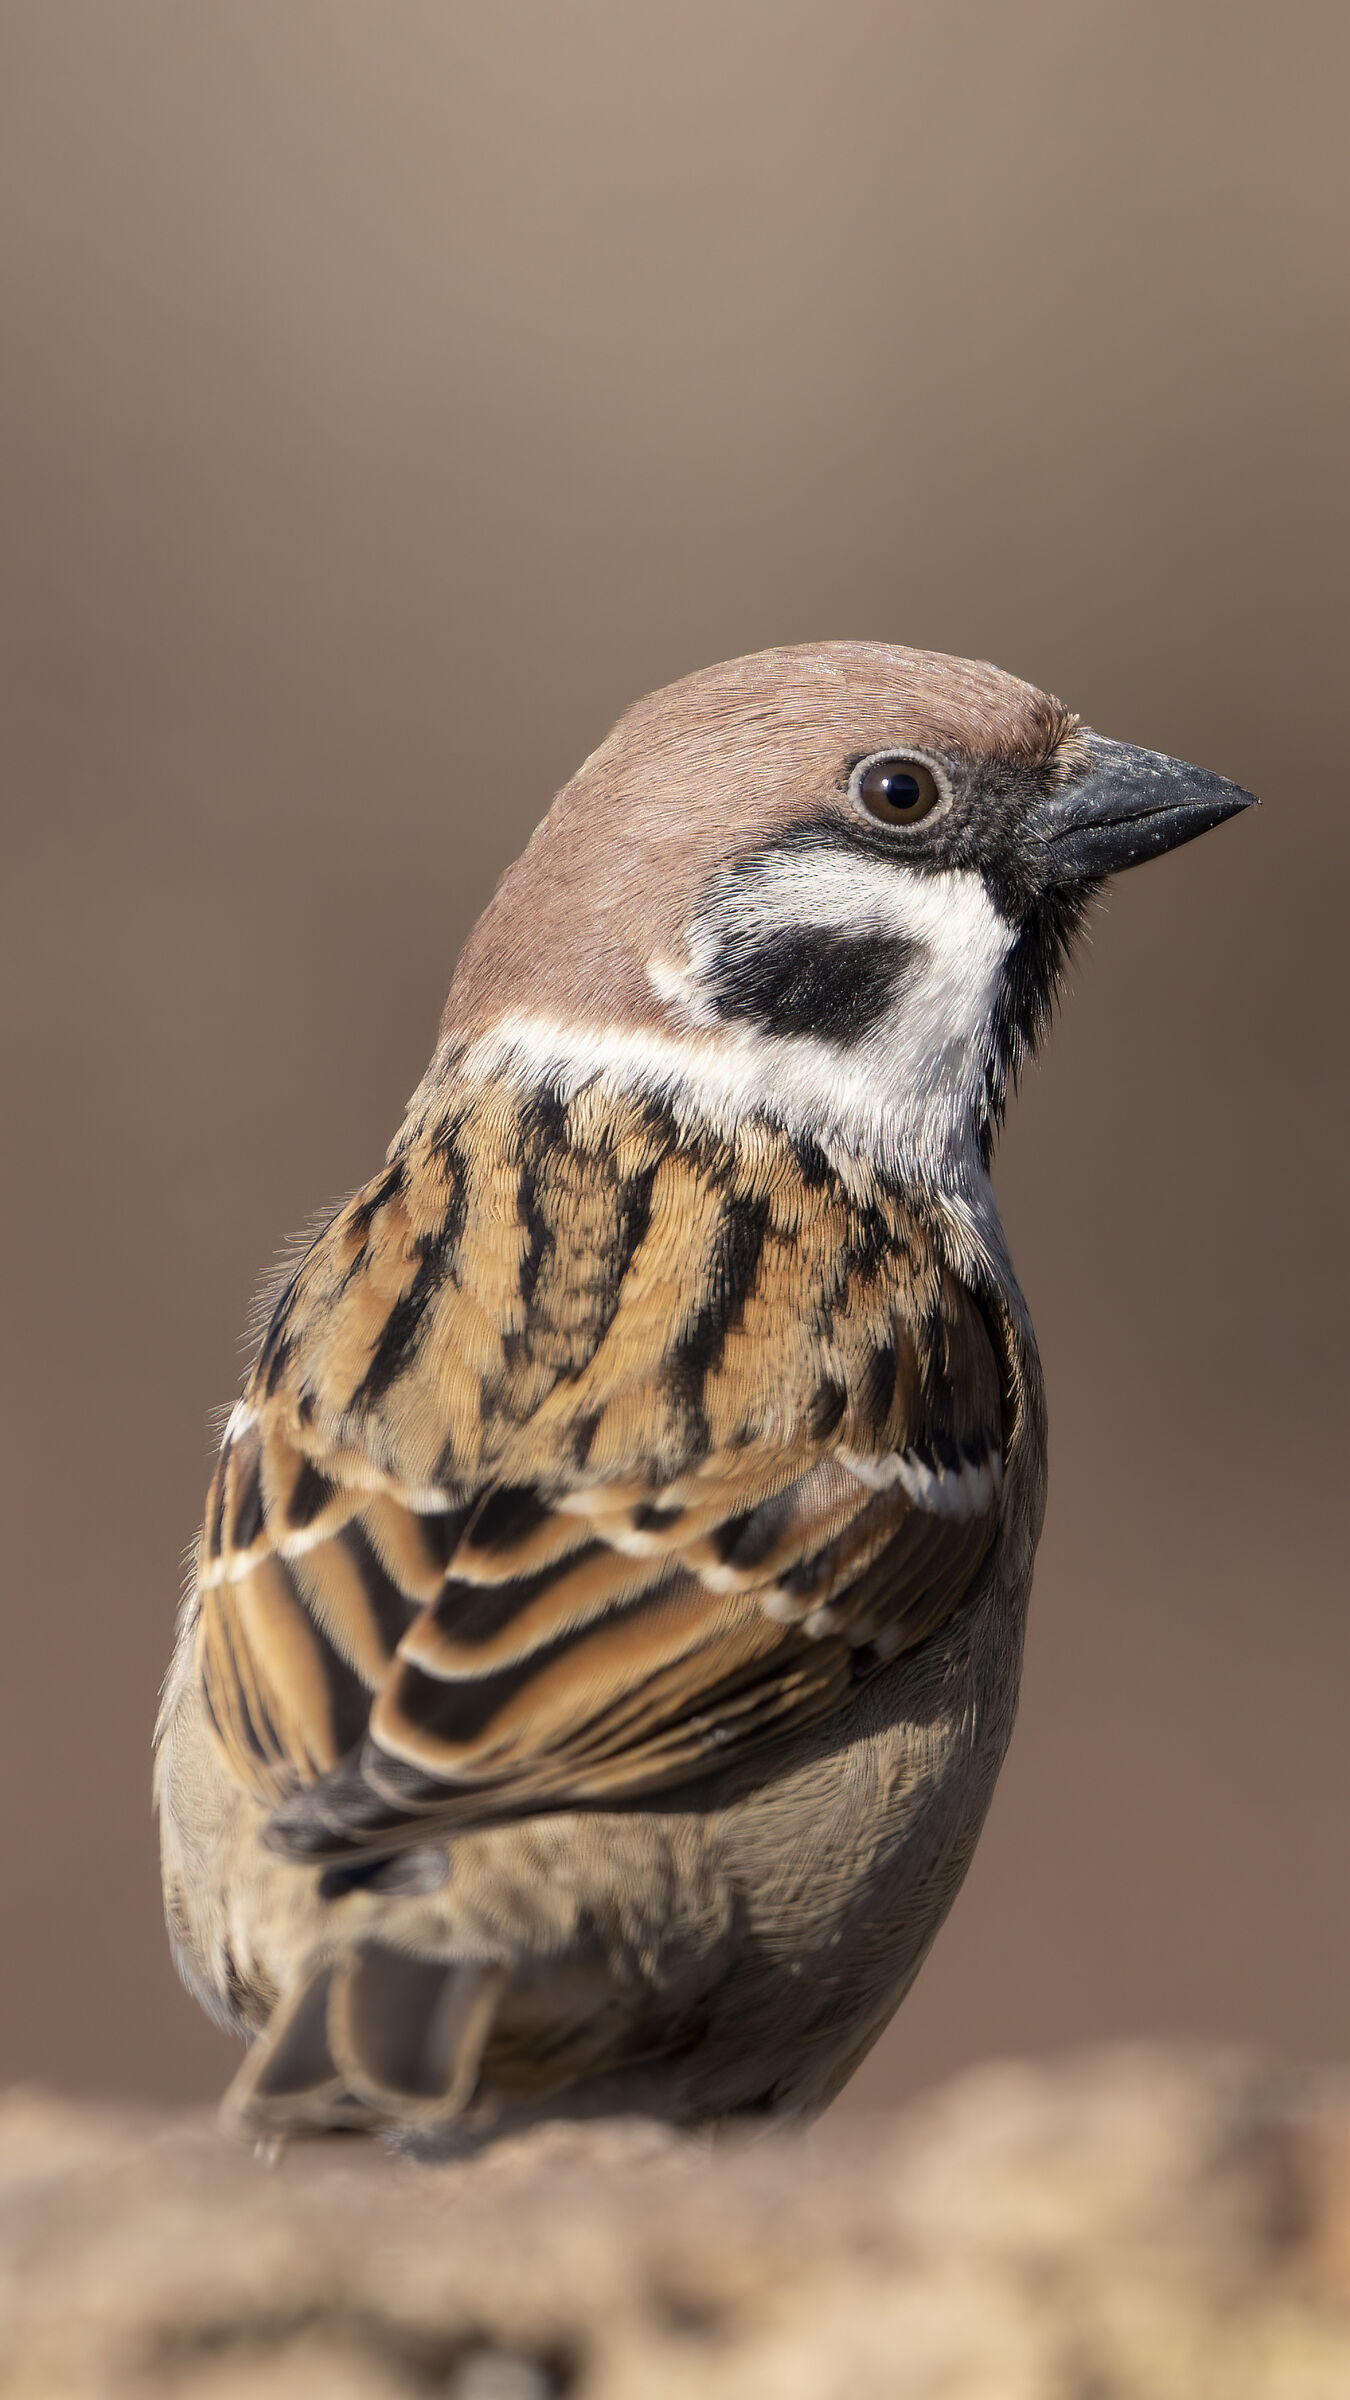 Tree sparrow...